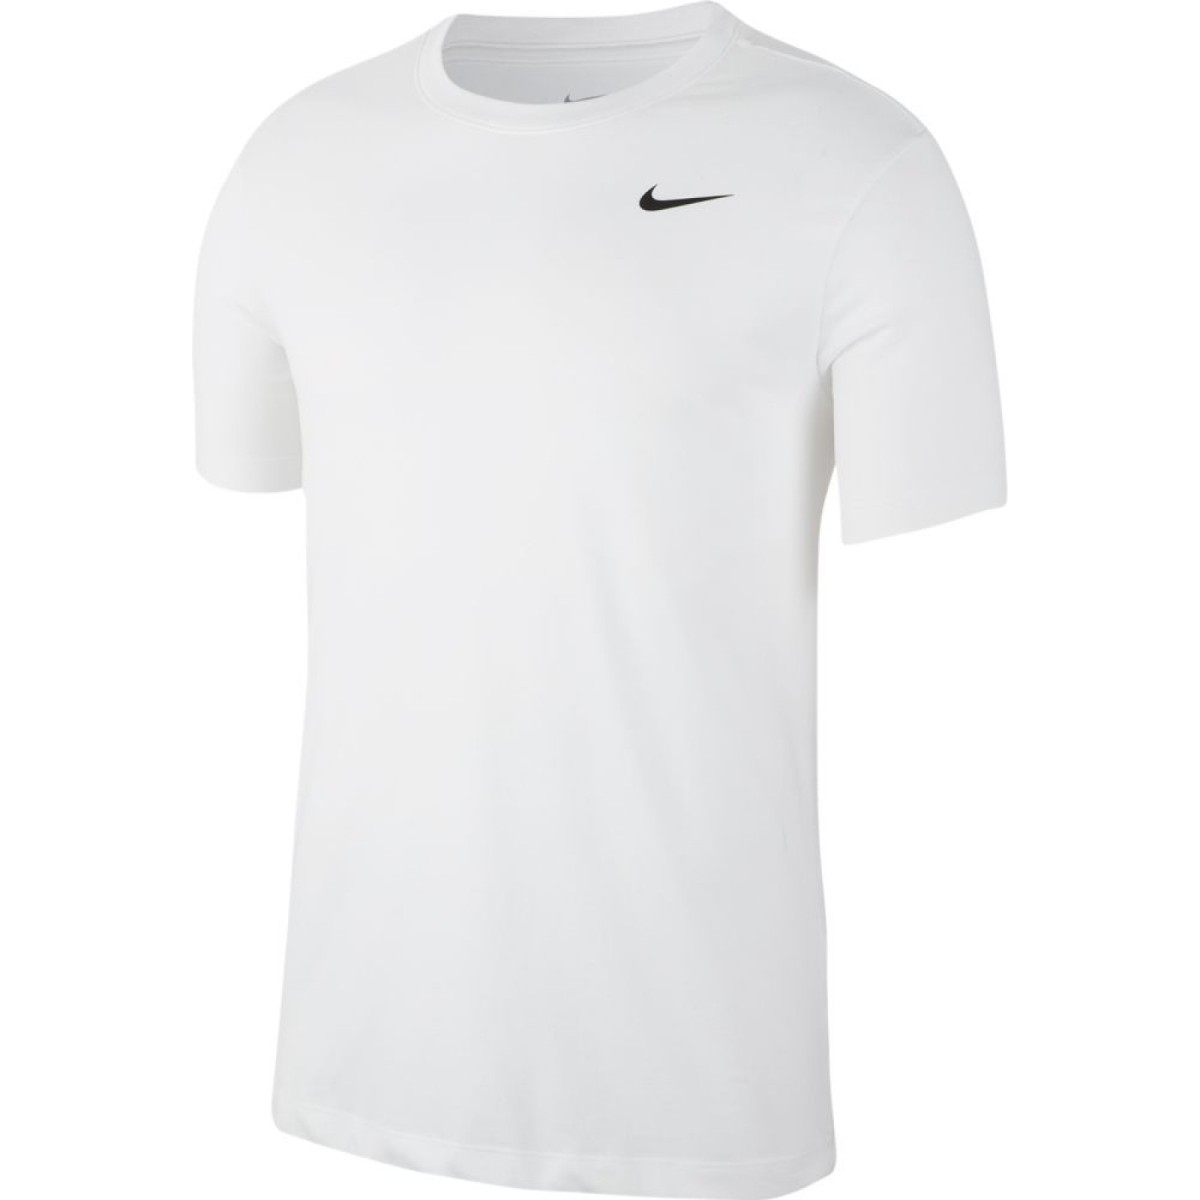 Nike Dri-FIT Solid Crew T-Shirt Black The Nike Dri-FIT T-Shirt delivers ...